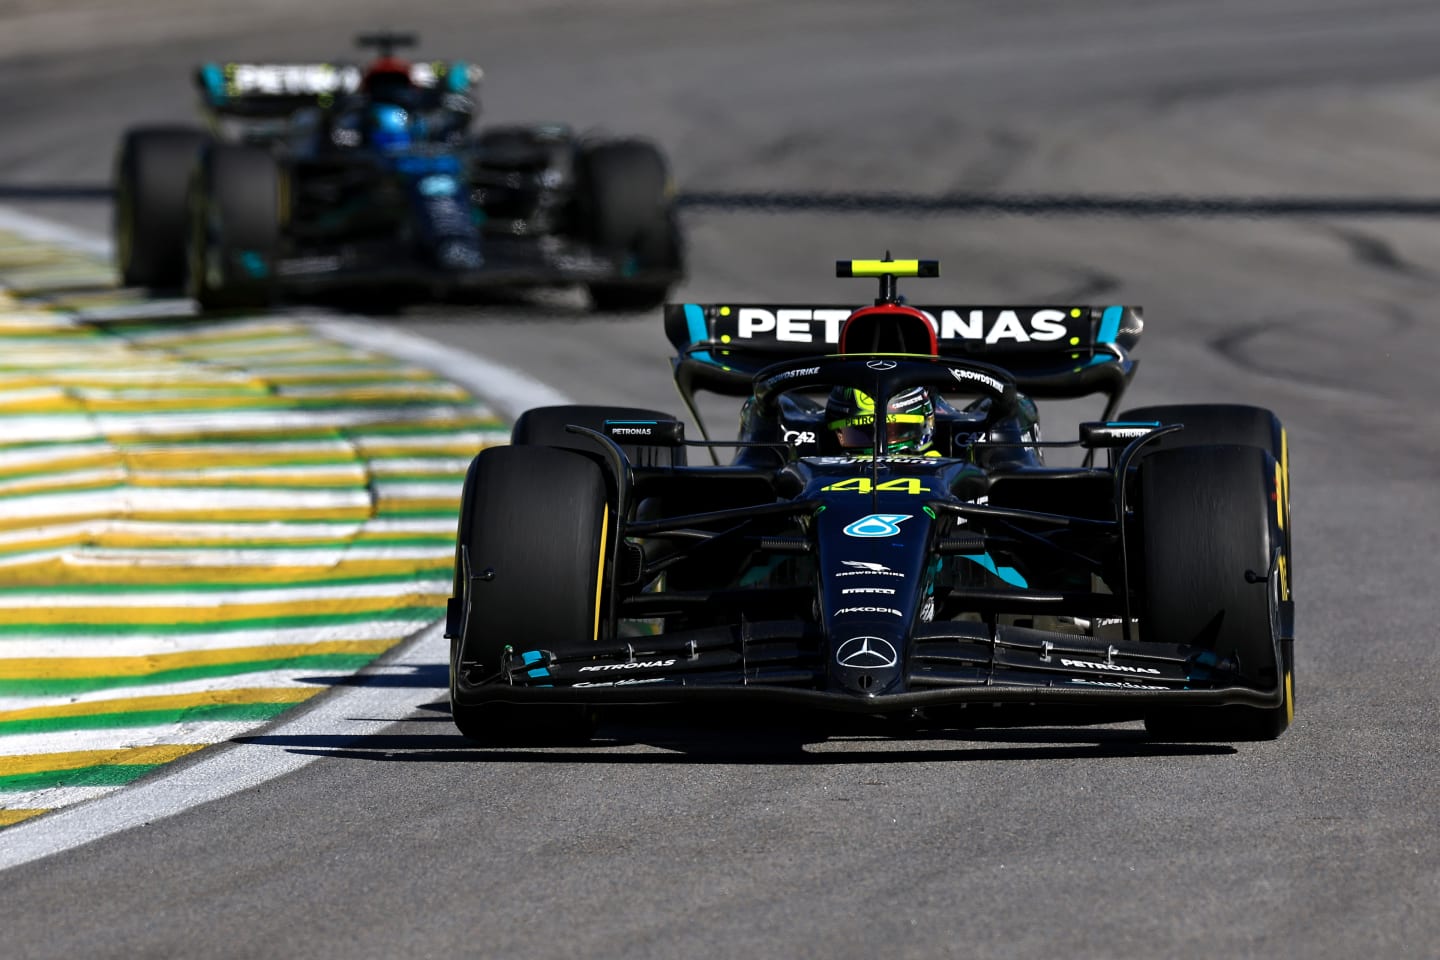 SAO PAULO, BRAZIL - NOVEMBER 05: Lewis Hamilton of Great Britain driving the (44) Mercedes AMG